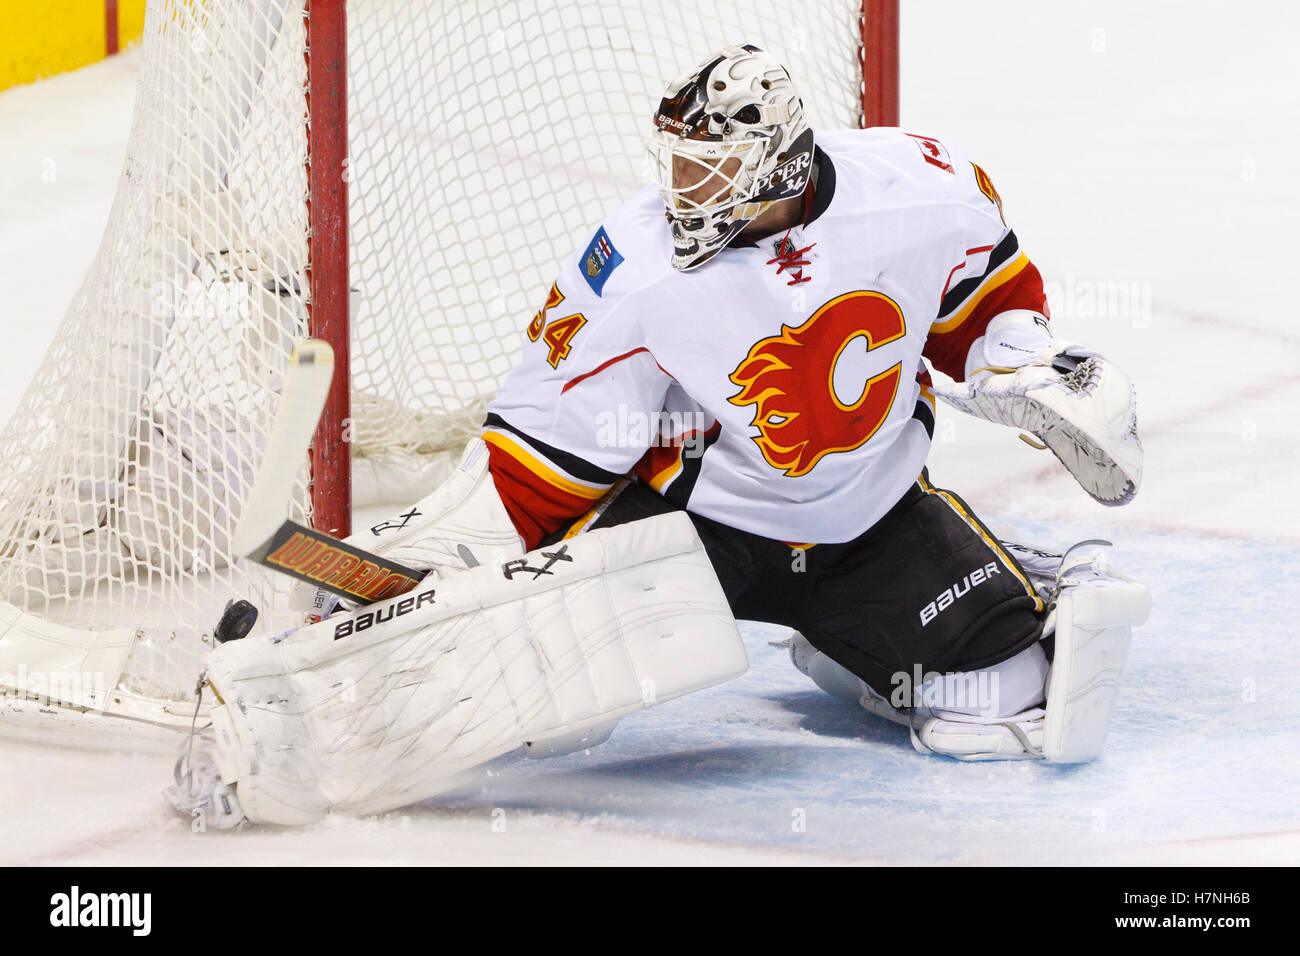 Flames to retire goaltender Miikka Kiprusoff's No. 34 in March